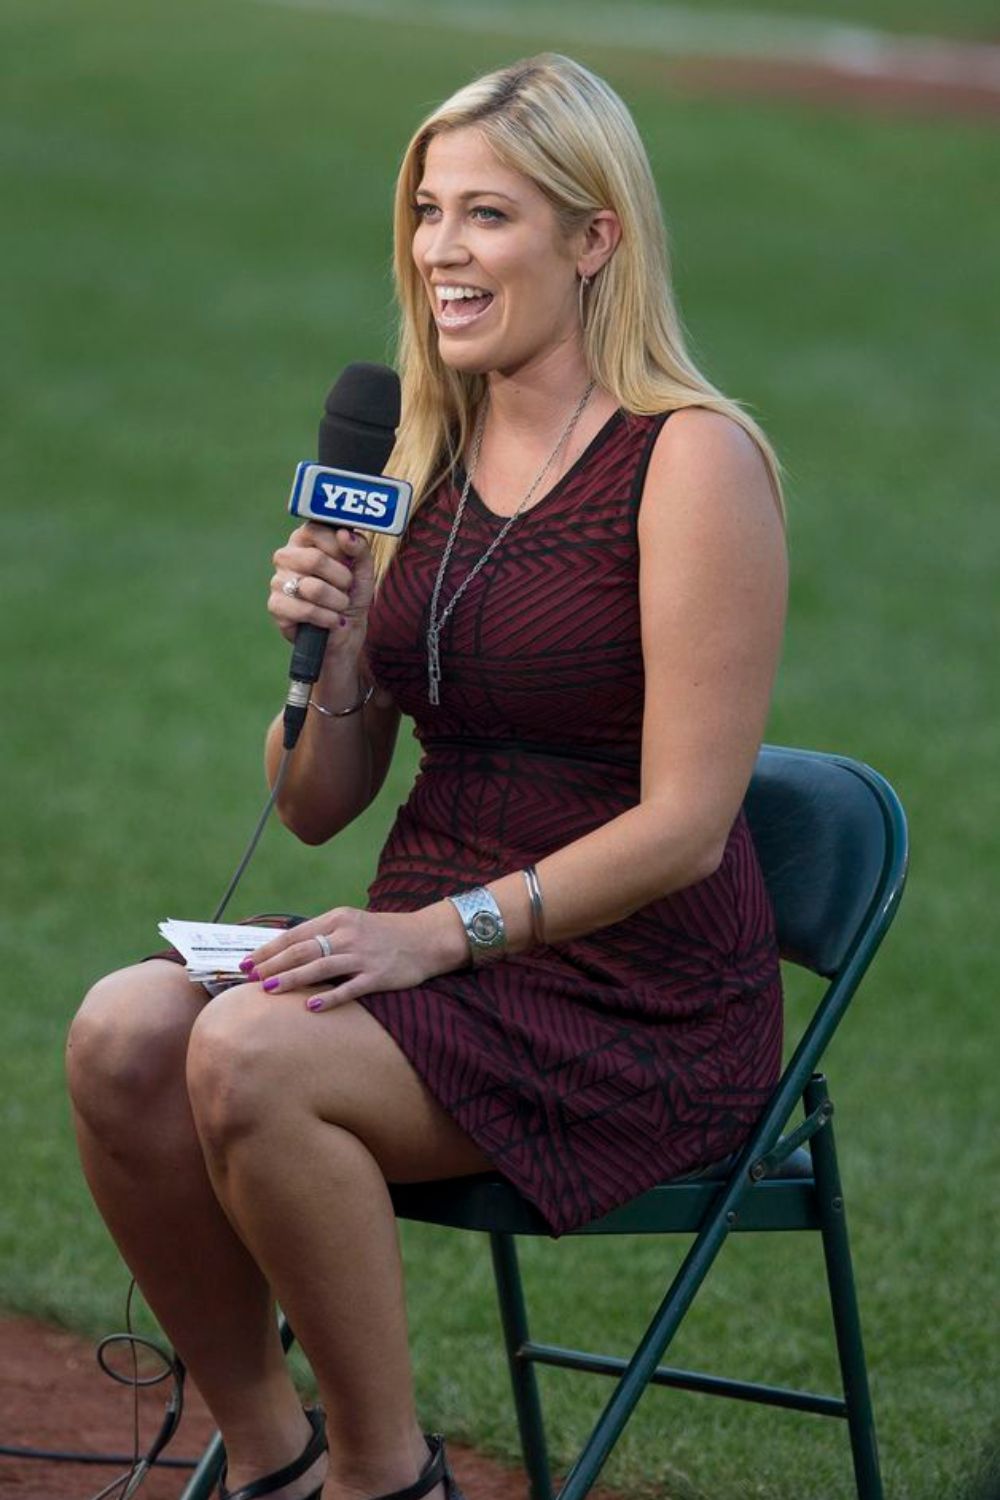 Meredith-Marakovits-the-reporter-for-YES-MLB